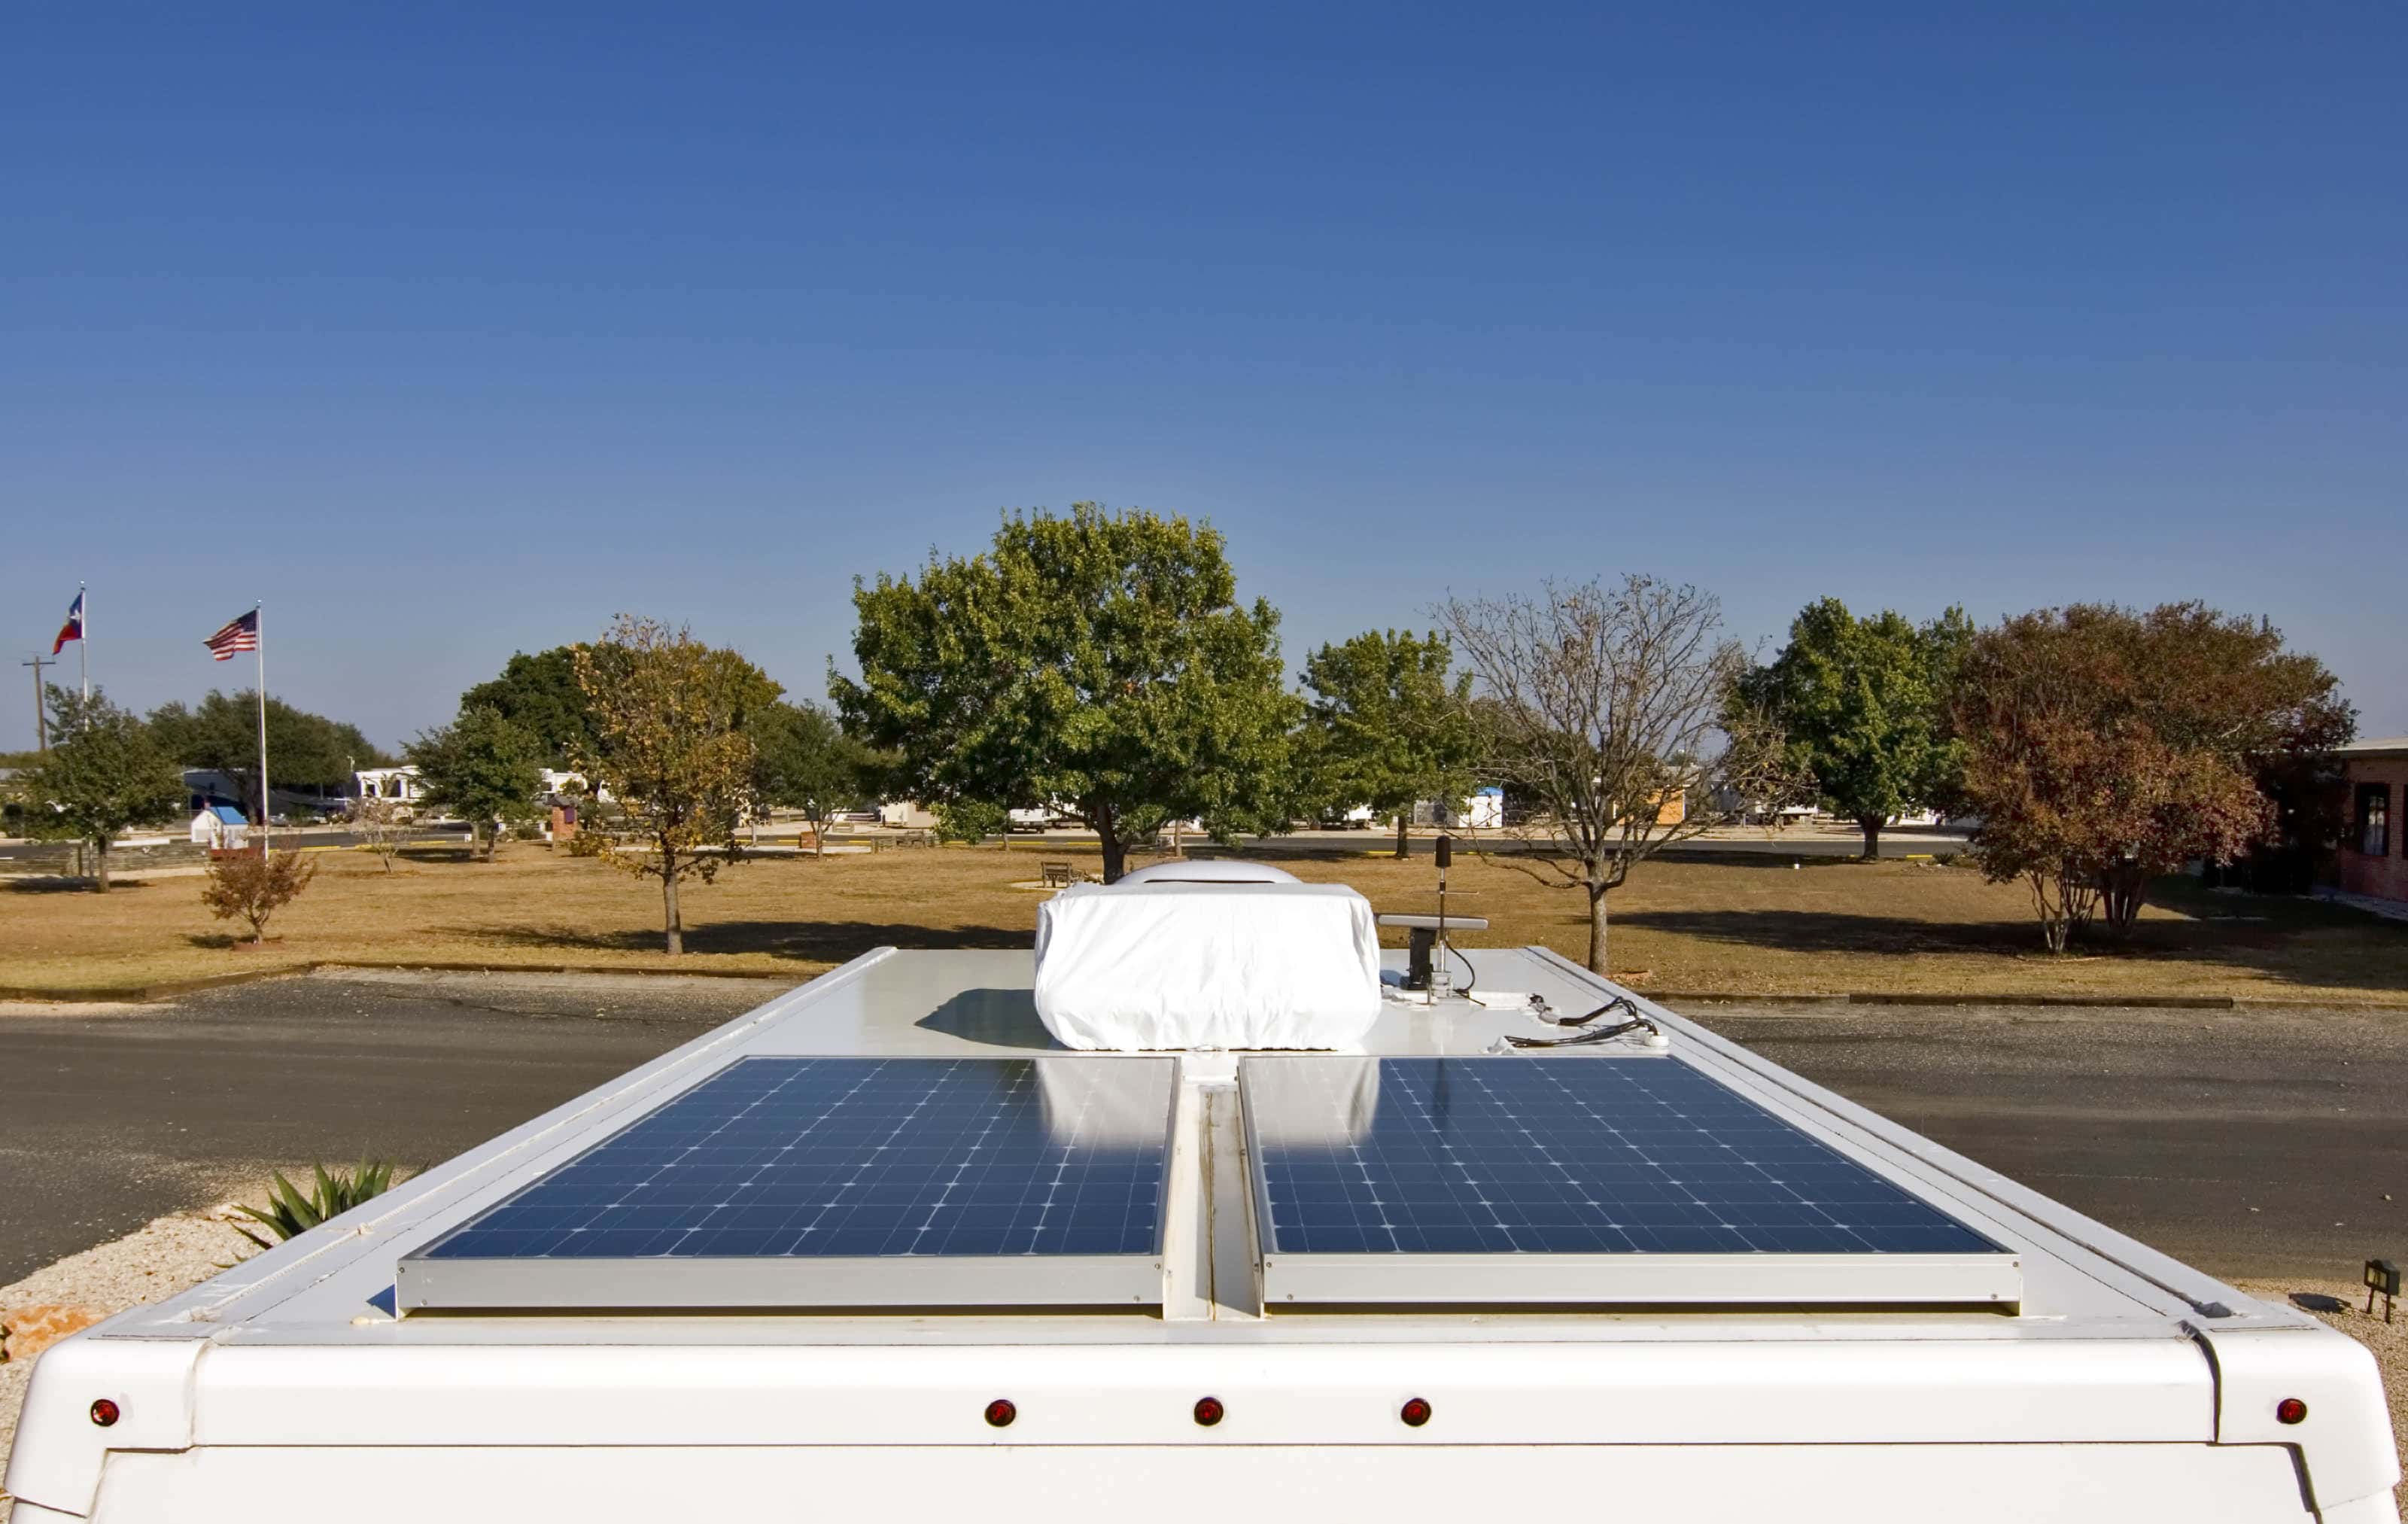 7 Best 100-Watt Solar Panels to Use Wherever You Need Them (Summer 2022)